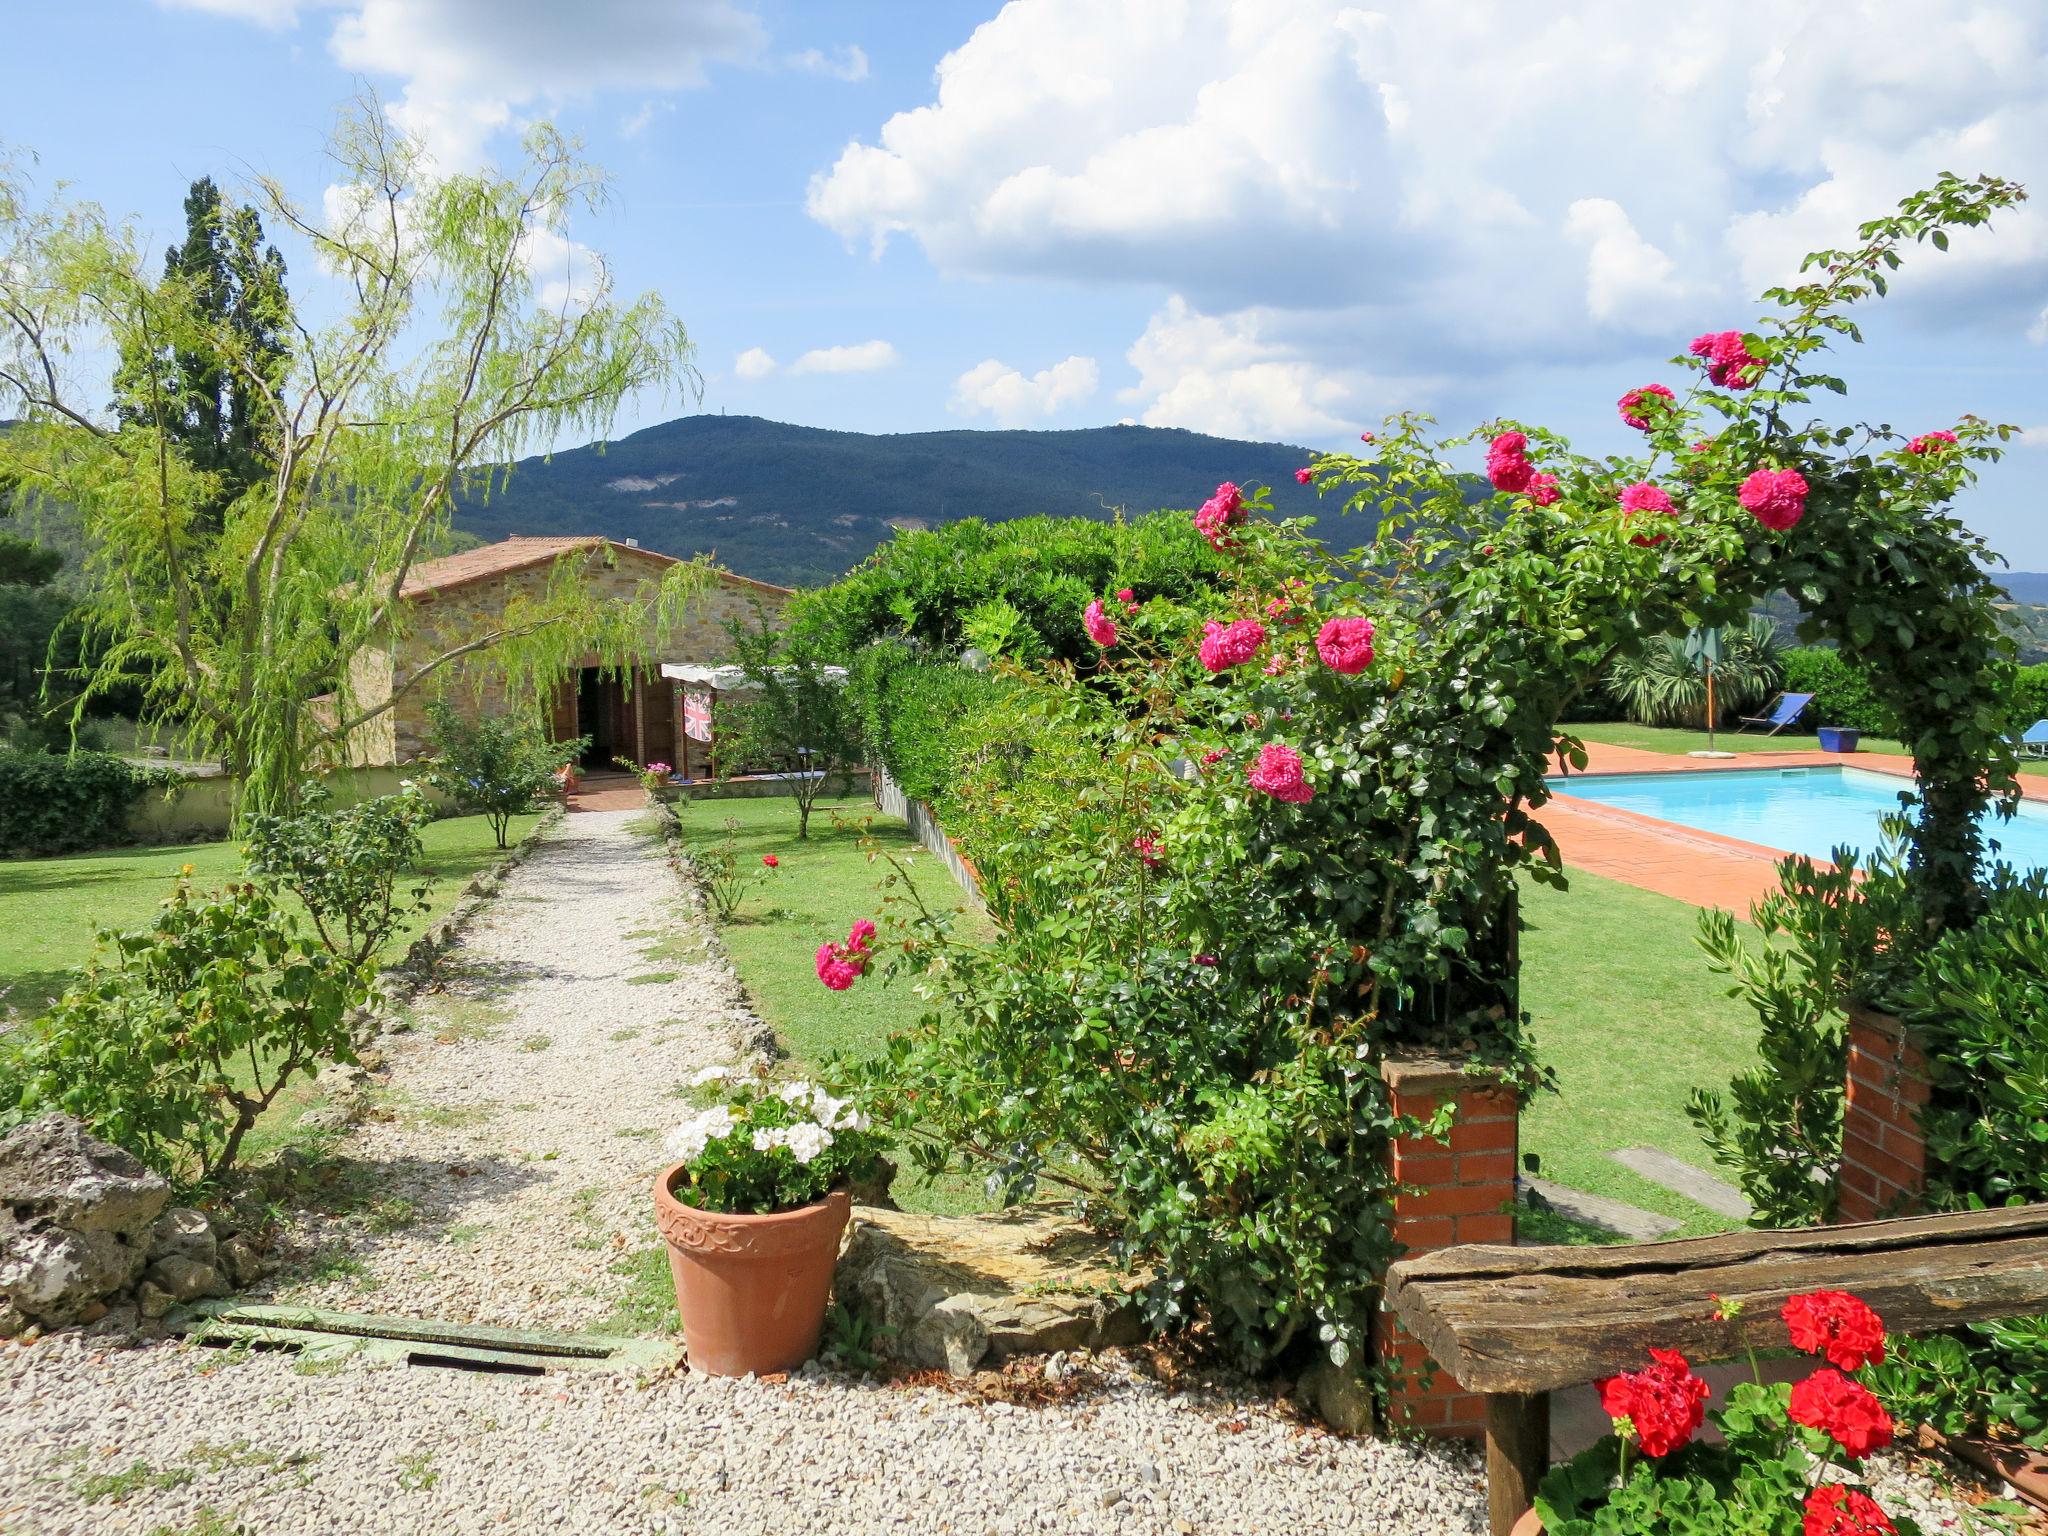 Foto 1 - Haus mit 3 Schlafzimmern in Castelnuovo di Val di Cecina mit privater pool und garten